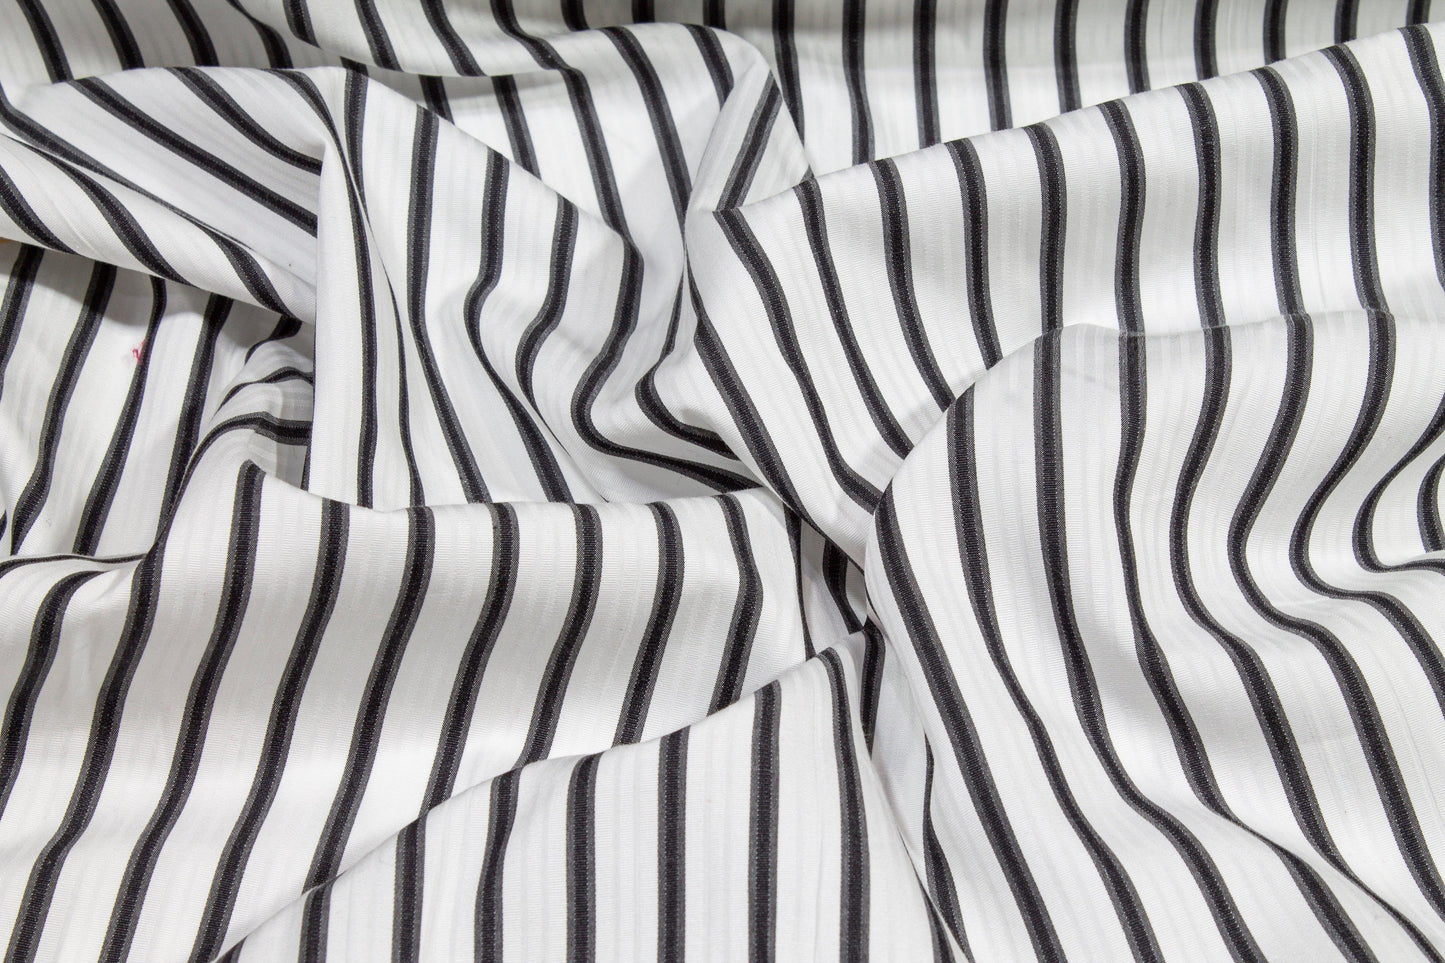 Striped Cotton Shirting - Black and White - Prime Fabrics